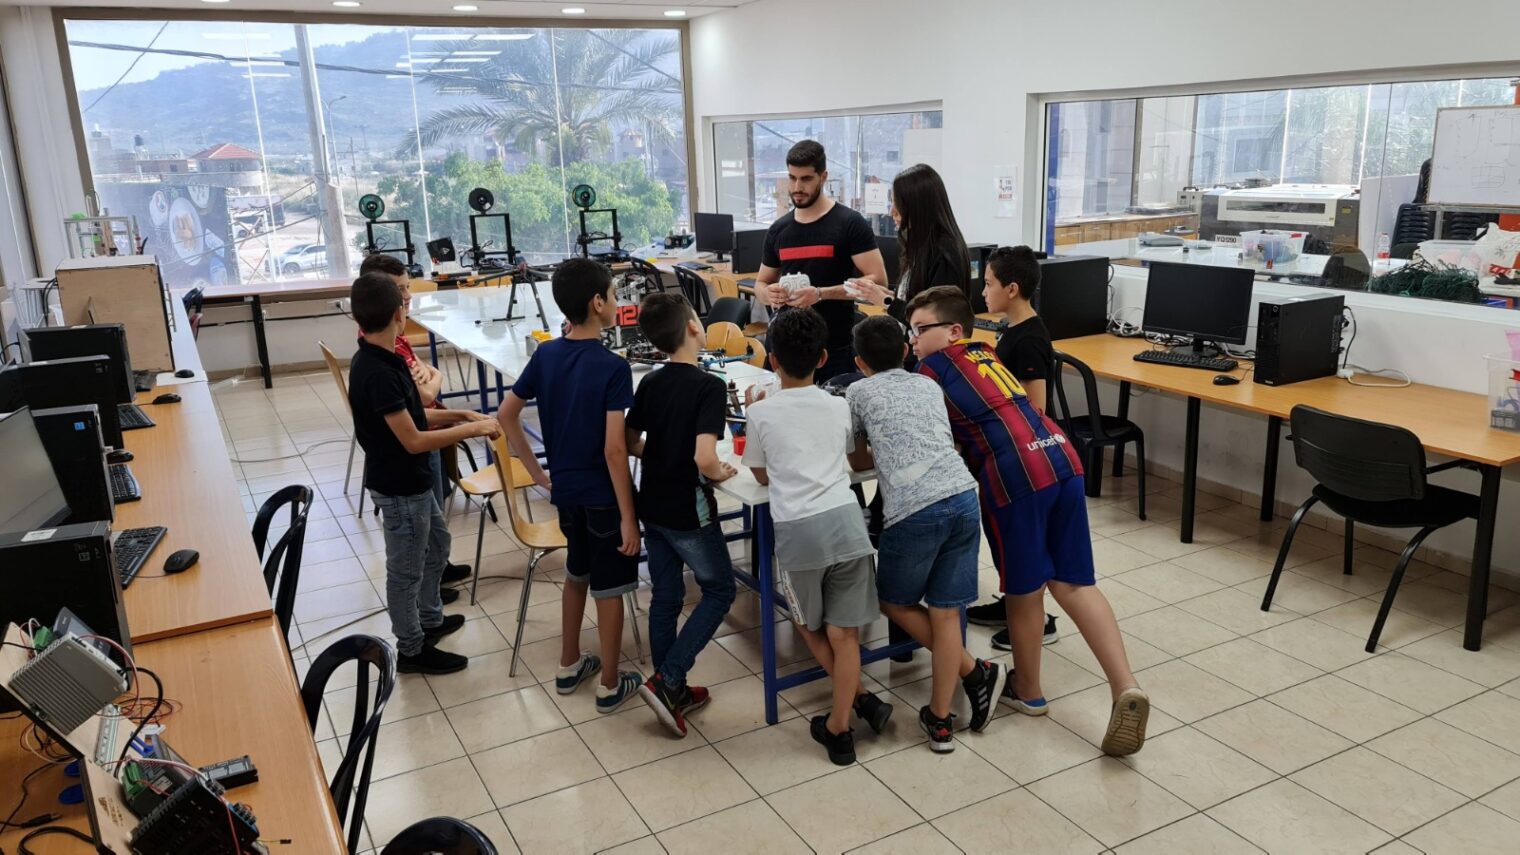 Arab and Jewish schoolchildren gather in Majd al-Krum for hands-on science activities. Photo courtesy of Moona